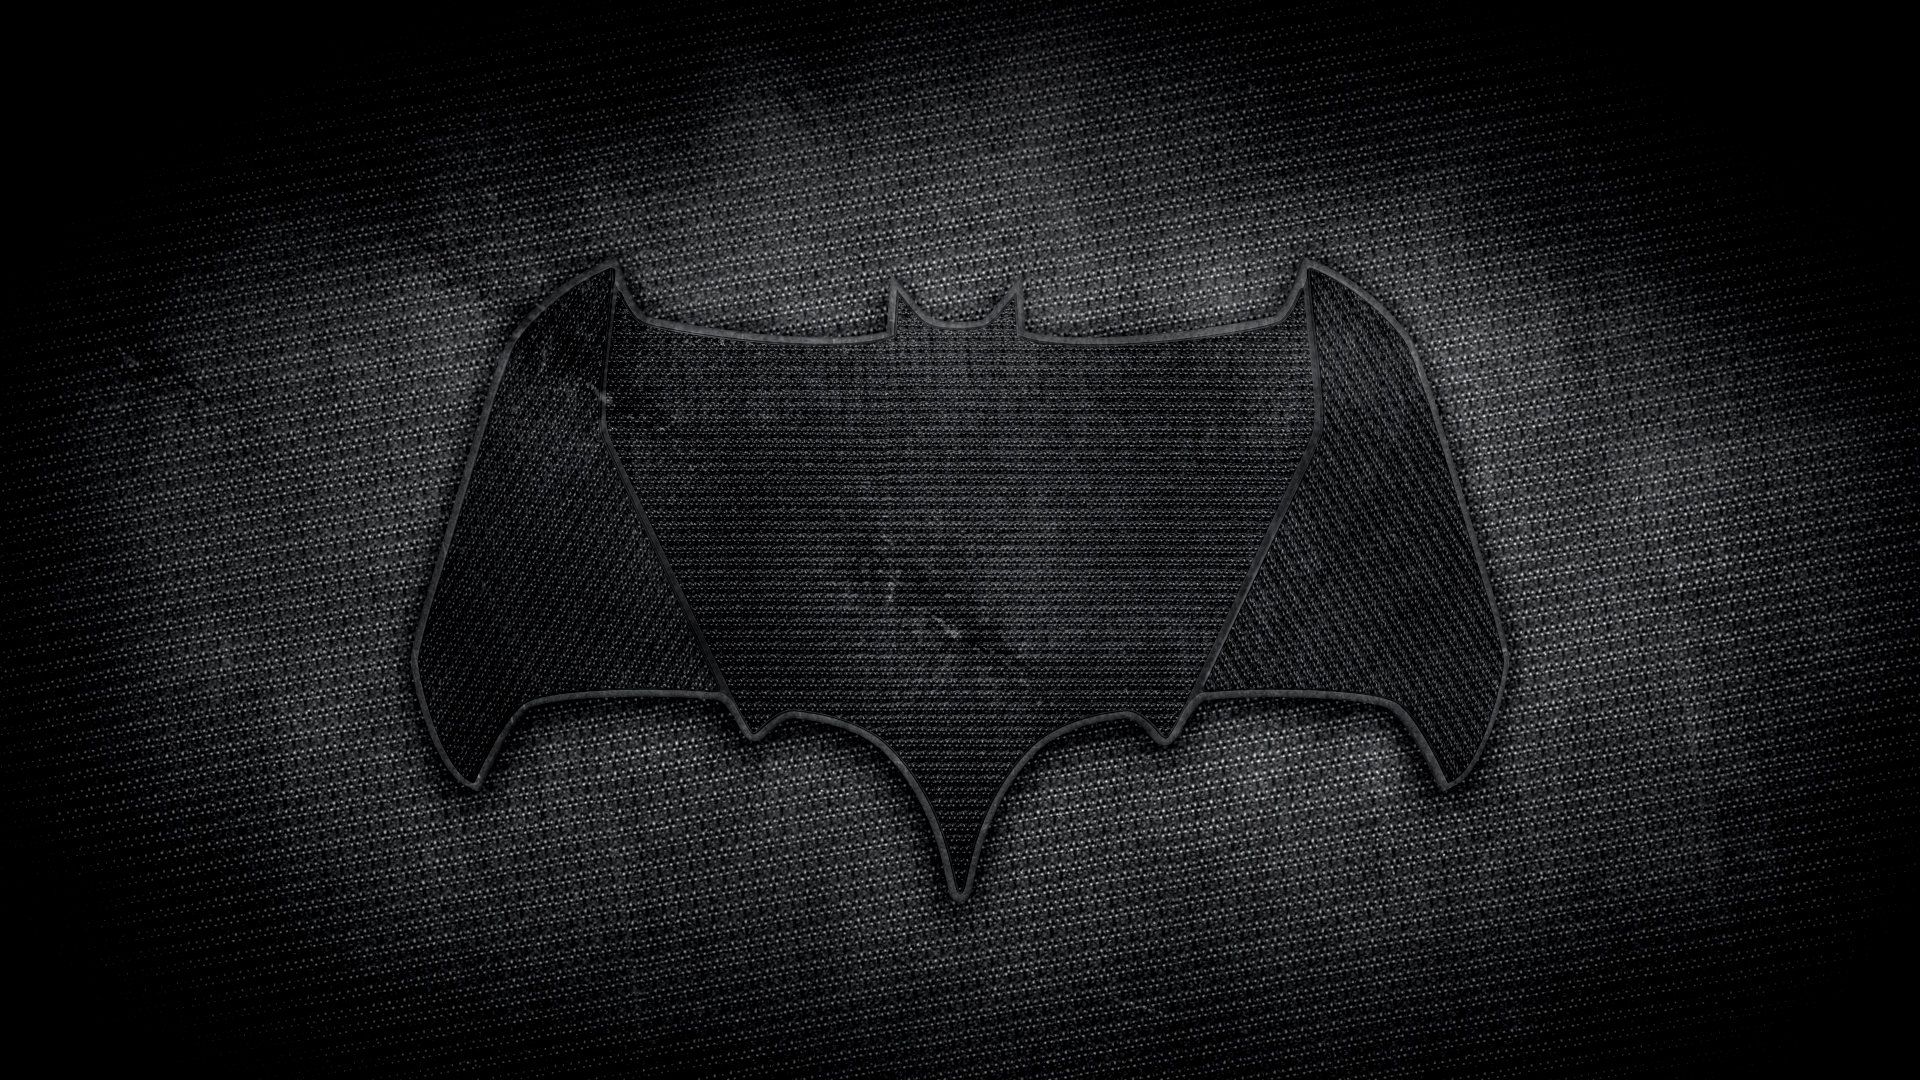 Best Batman Logo (Symbol) wallpaper ID:41794 for High Resolution hd 1080p PC